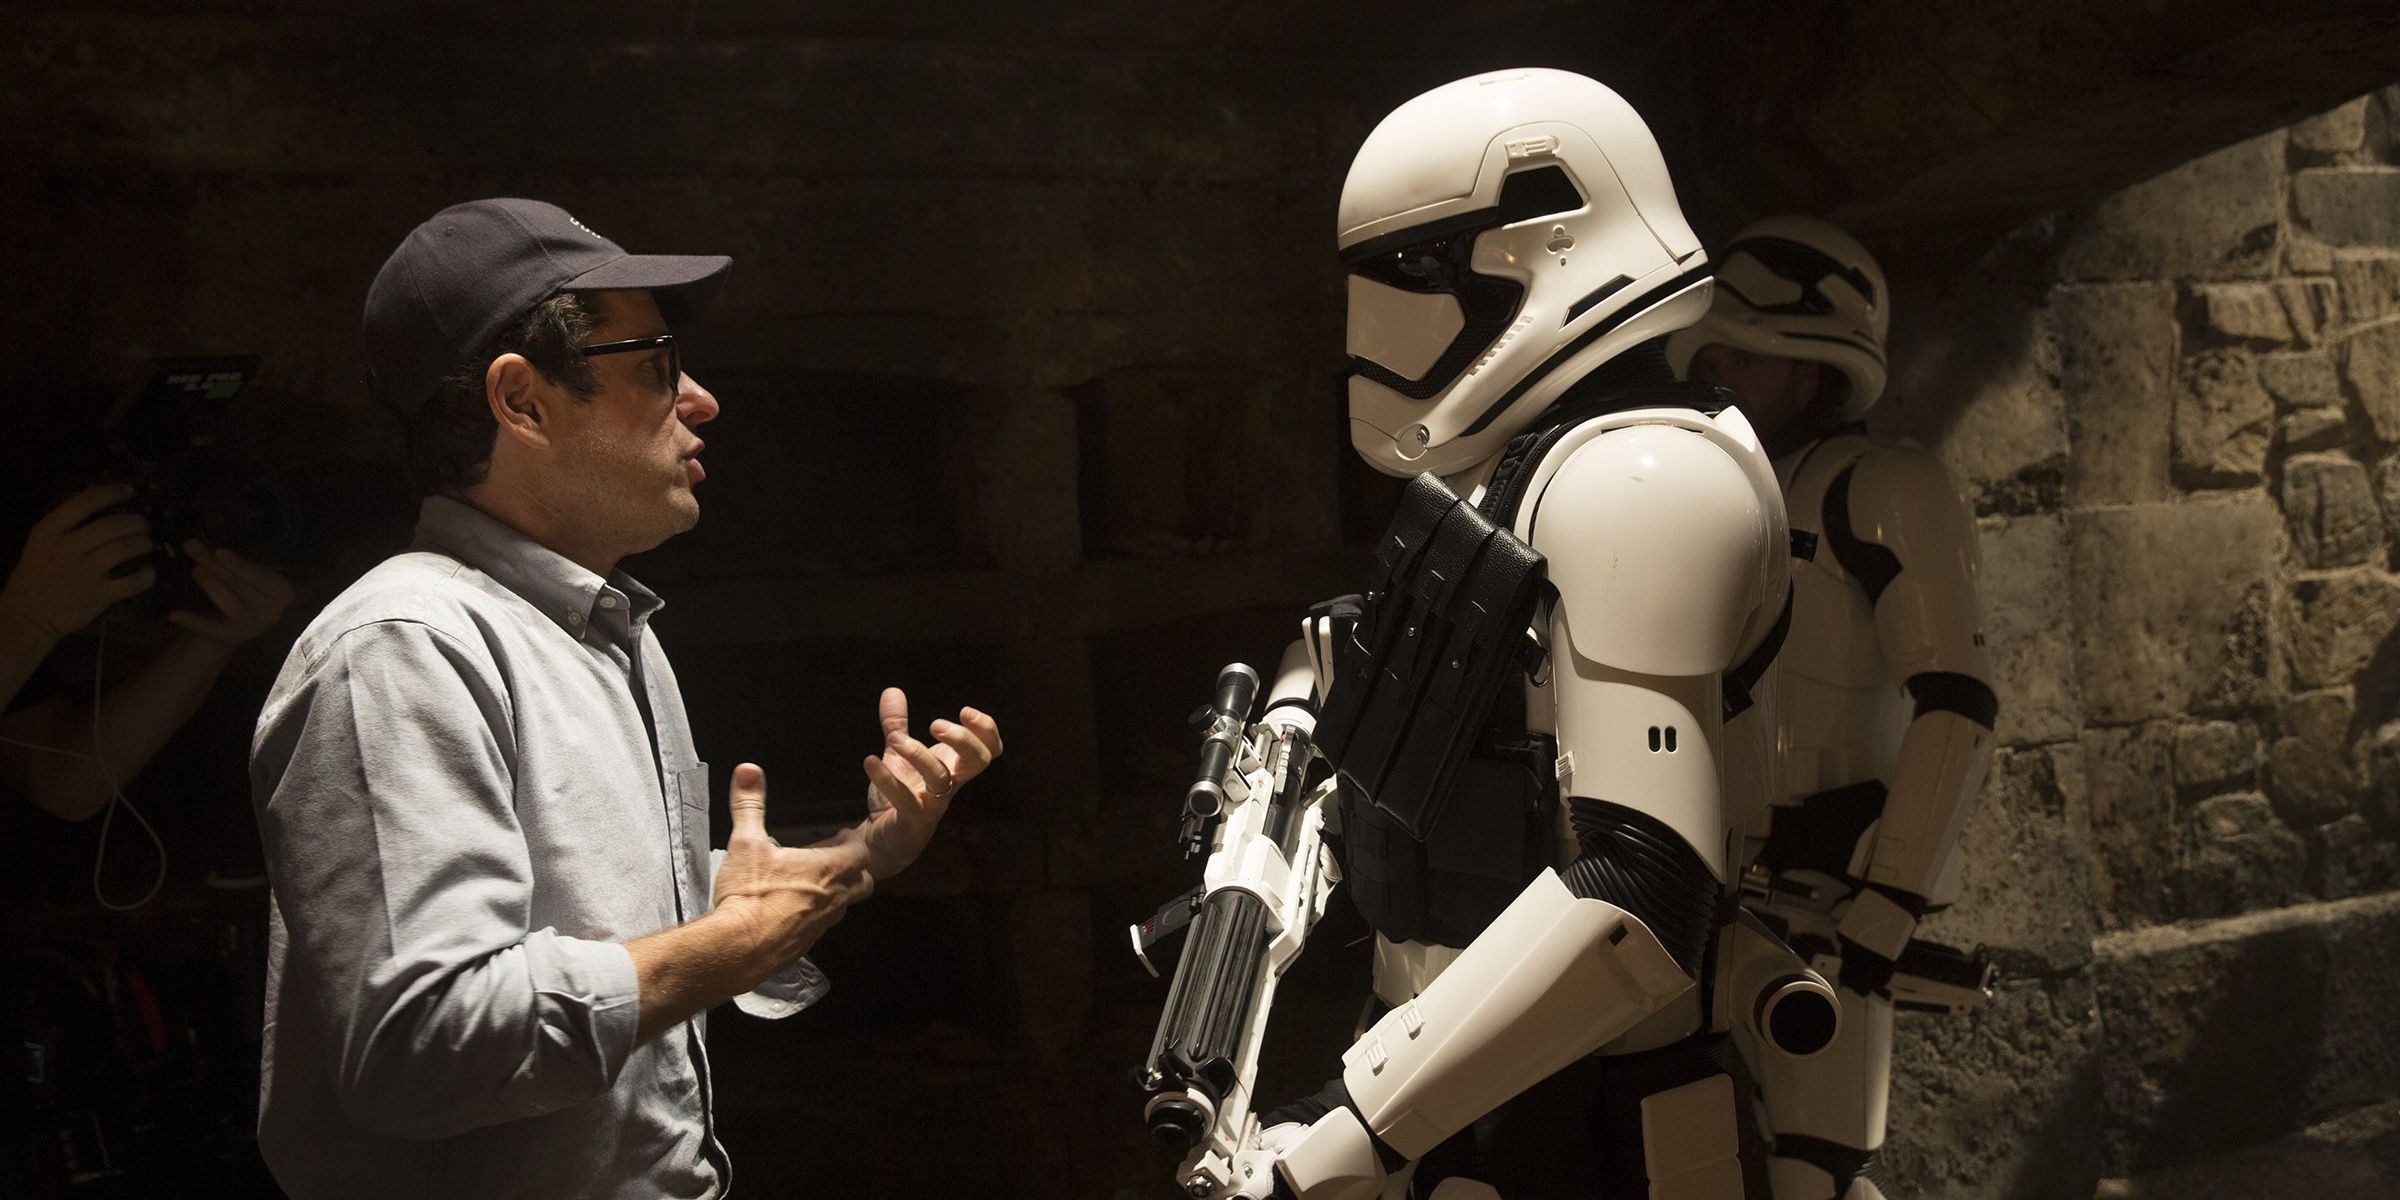 JJ Abrams directing Star Wars Episode VII: The Force Awakens